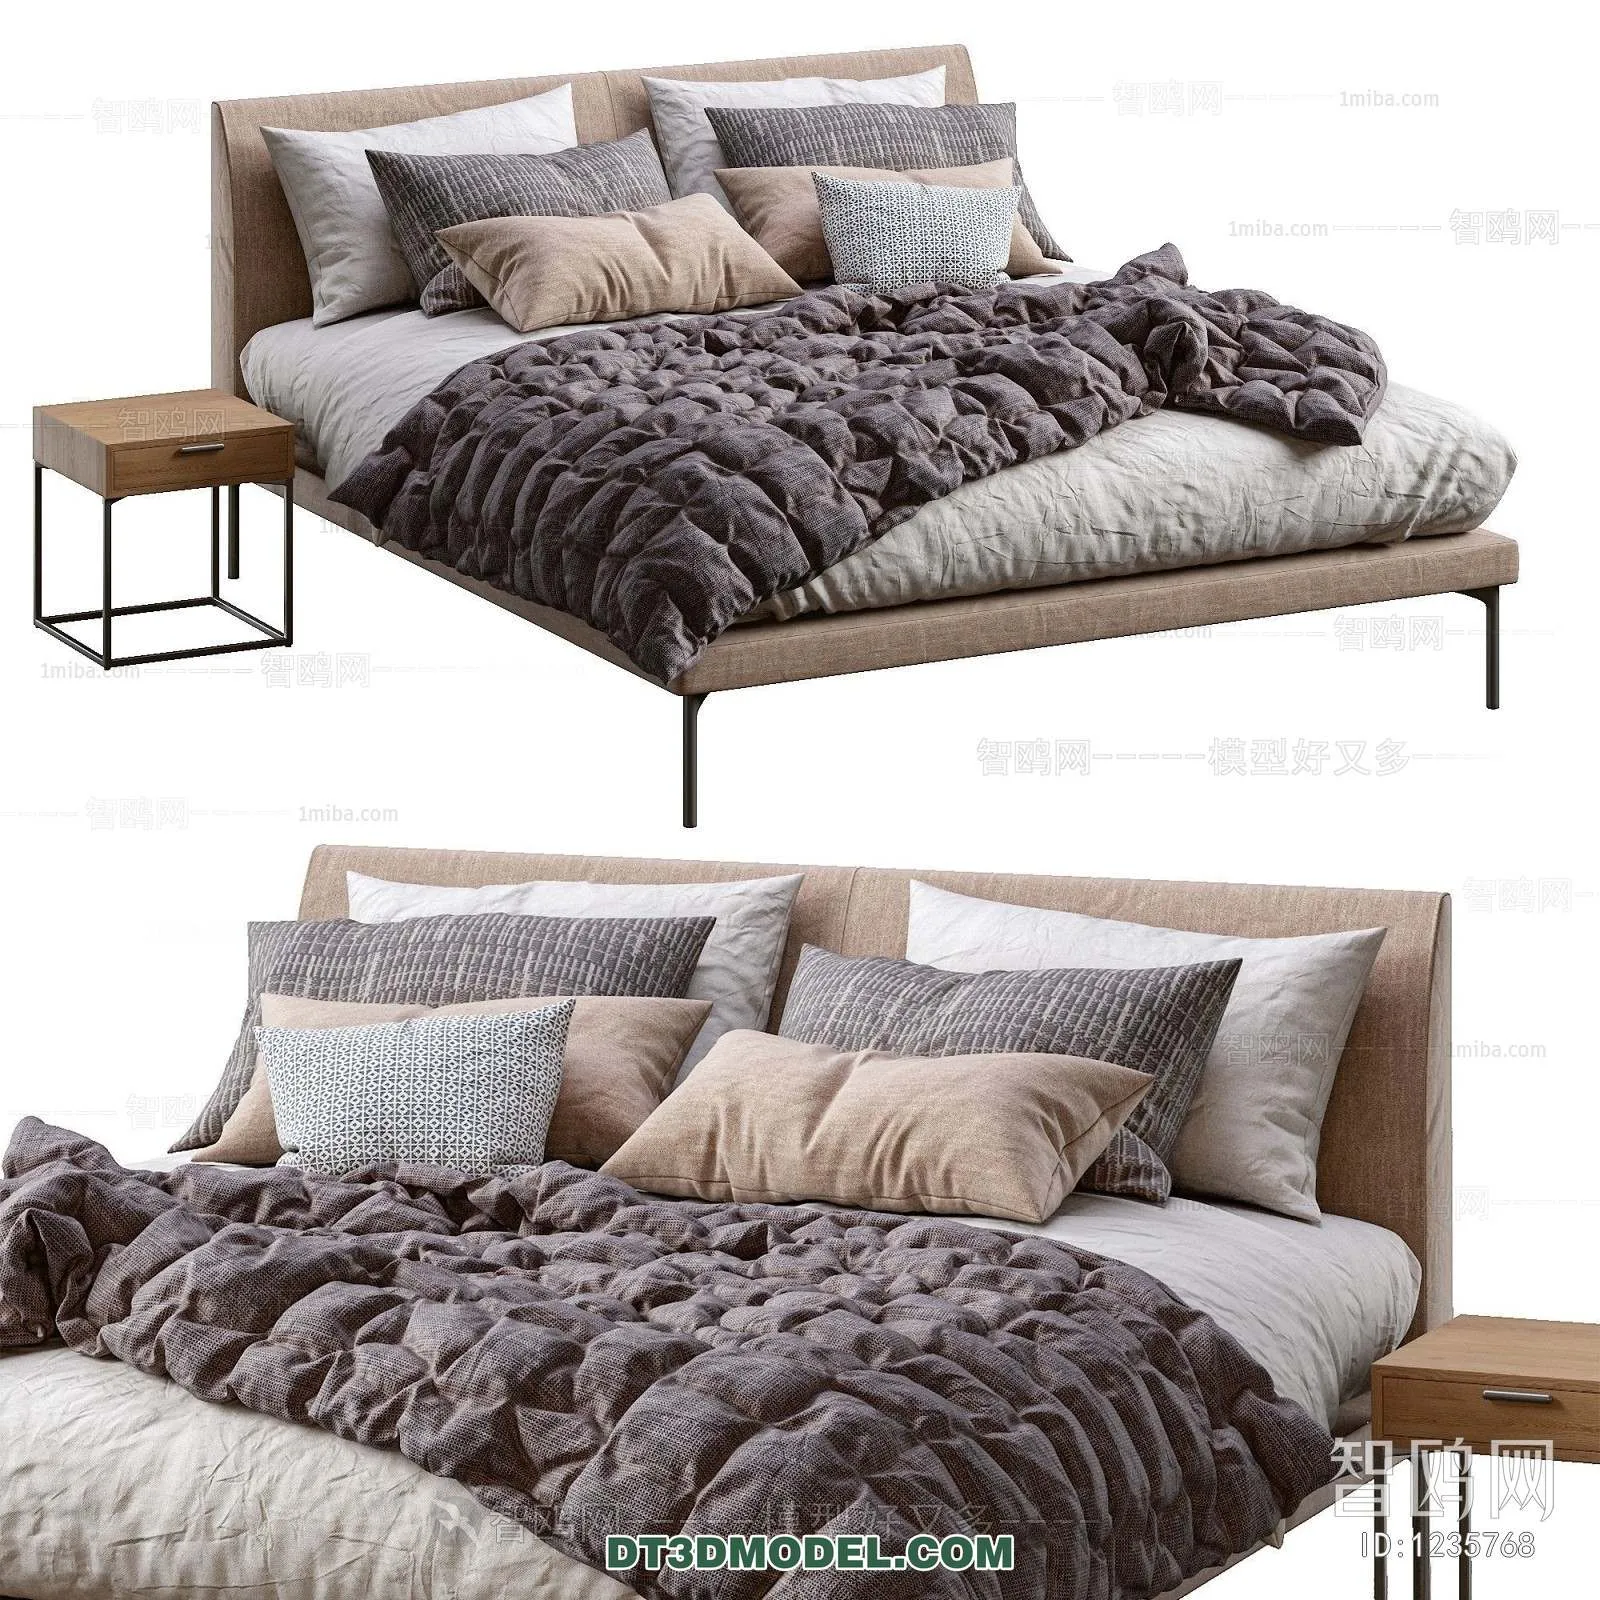 Double Bed 3D Models – 0076